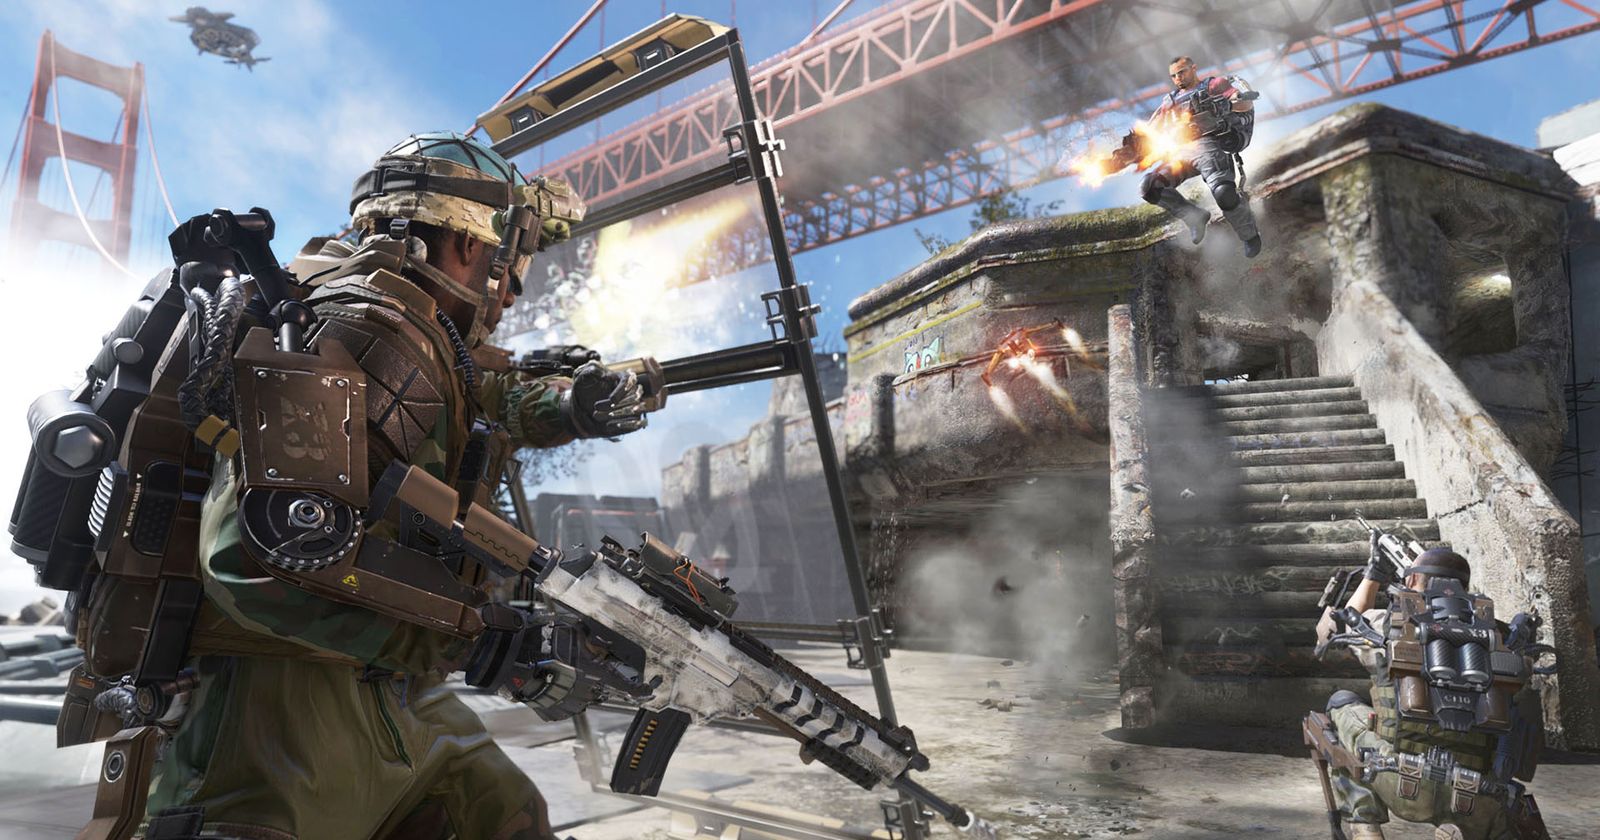 Modern Warfare 3 Beta: Sledgehammer Games Swiftly Nerfs Overpowered Battle  Rage Equipment. Call of Duty news - eSports events review, analytics,  announcements, interviews, statistics - TY_hbKzR